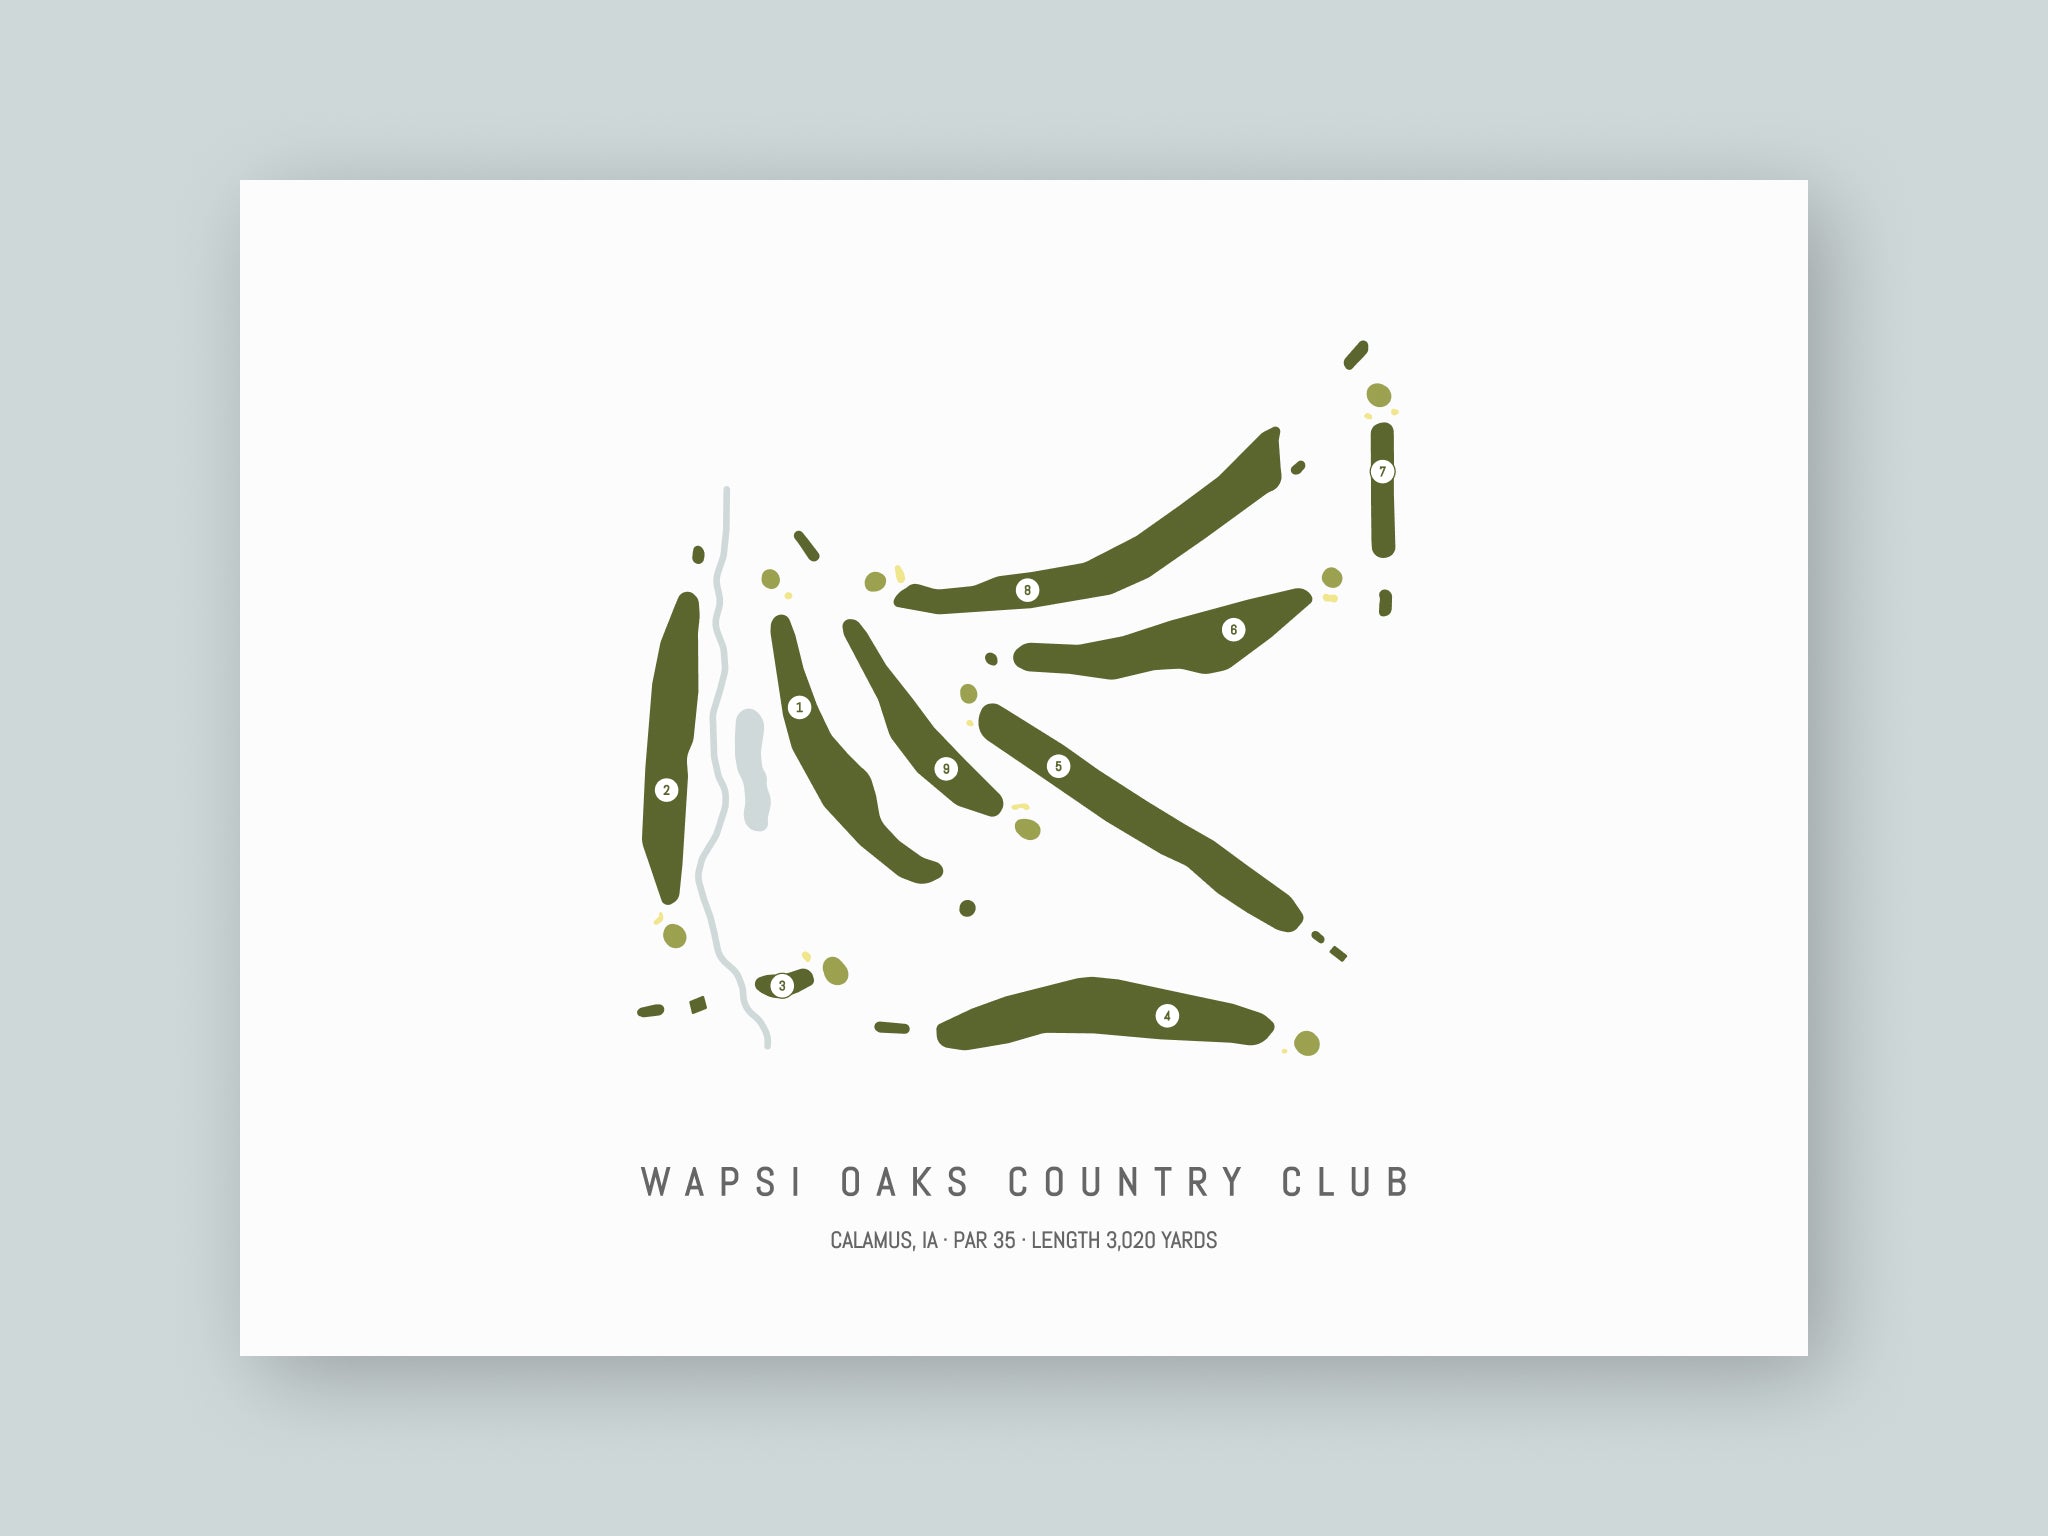 Wapsi-Oaks-Country-Club-IA--Unframed-24x18-With-Hole-Numbers